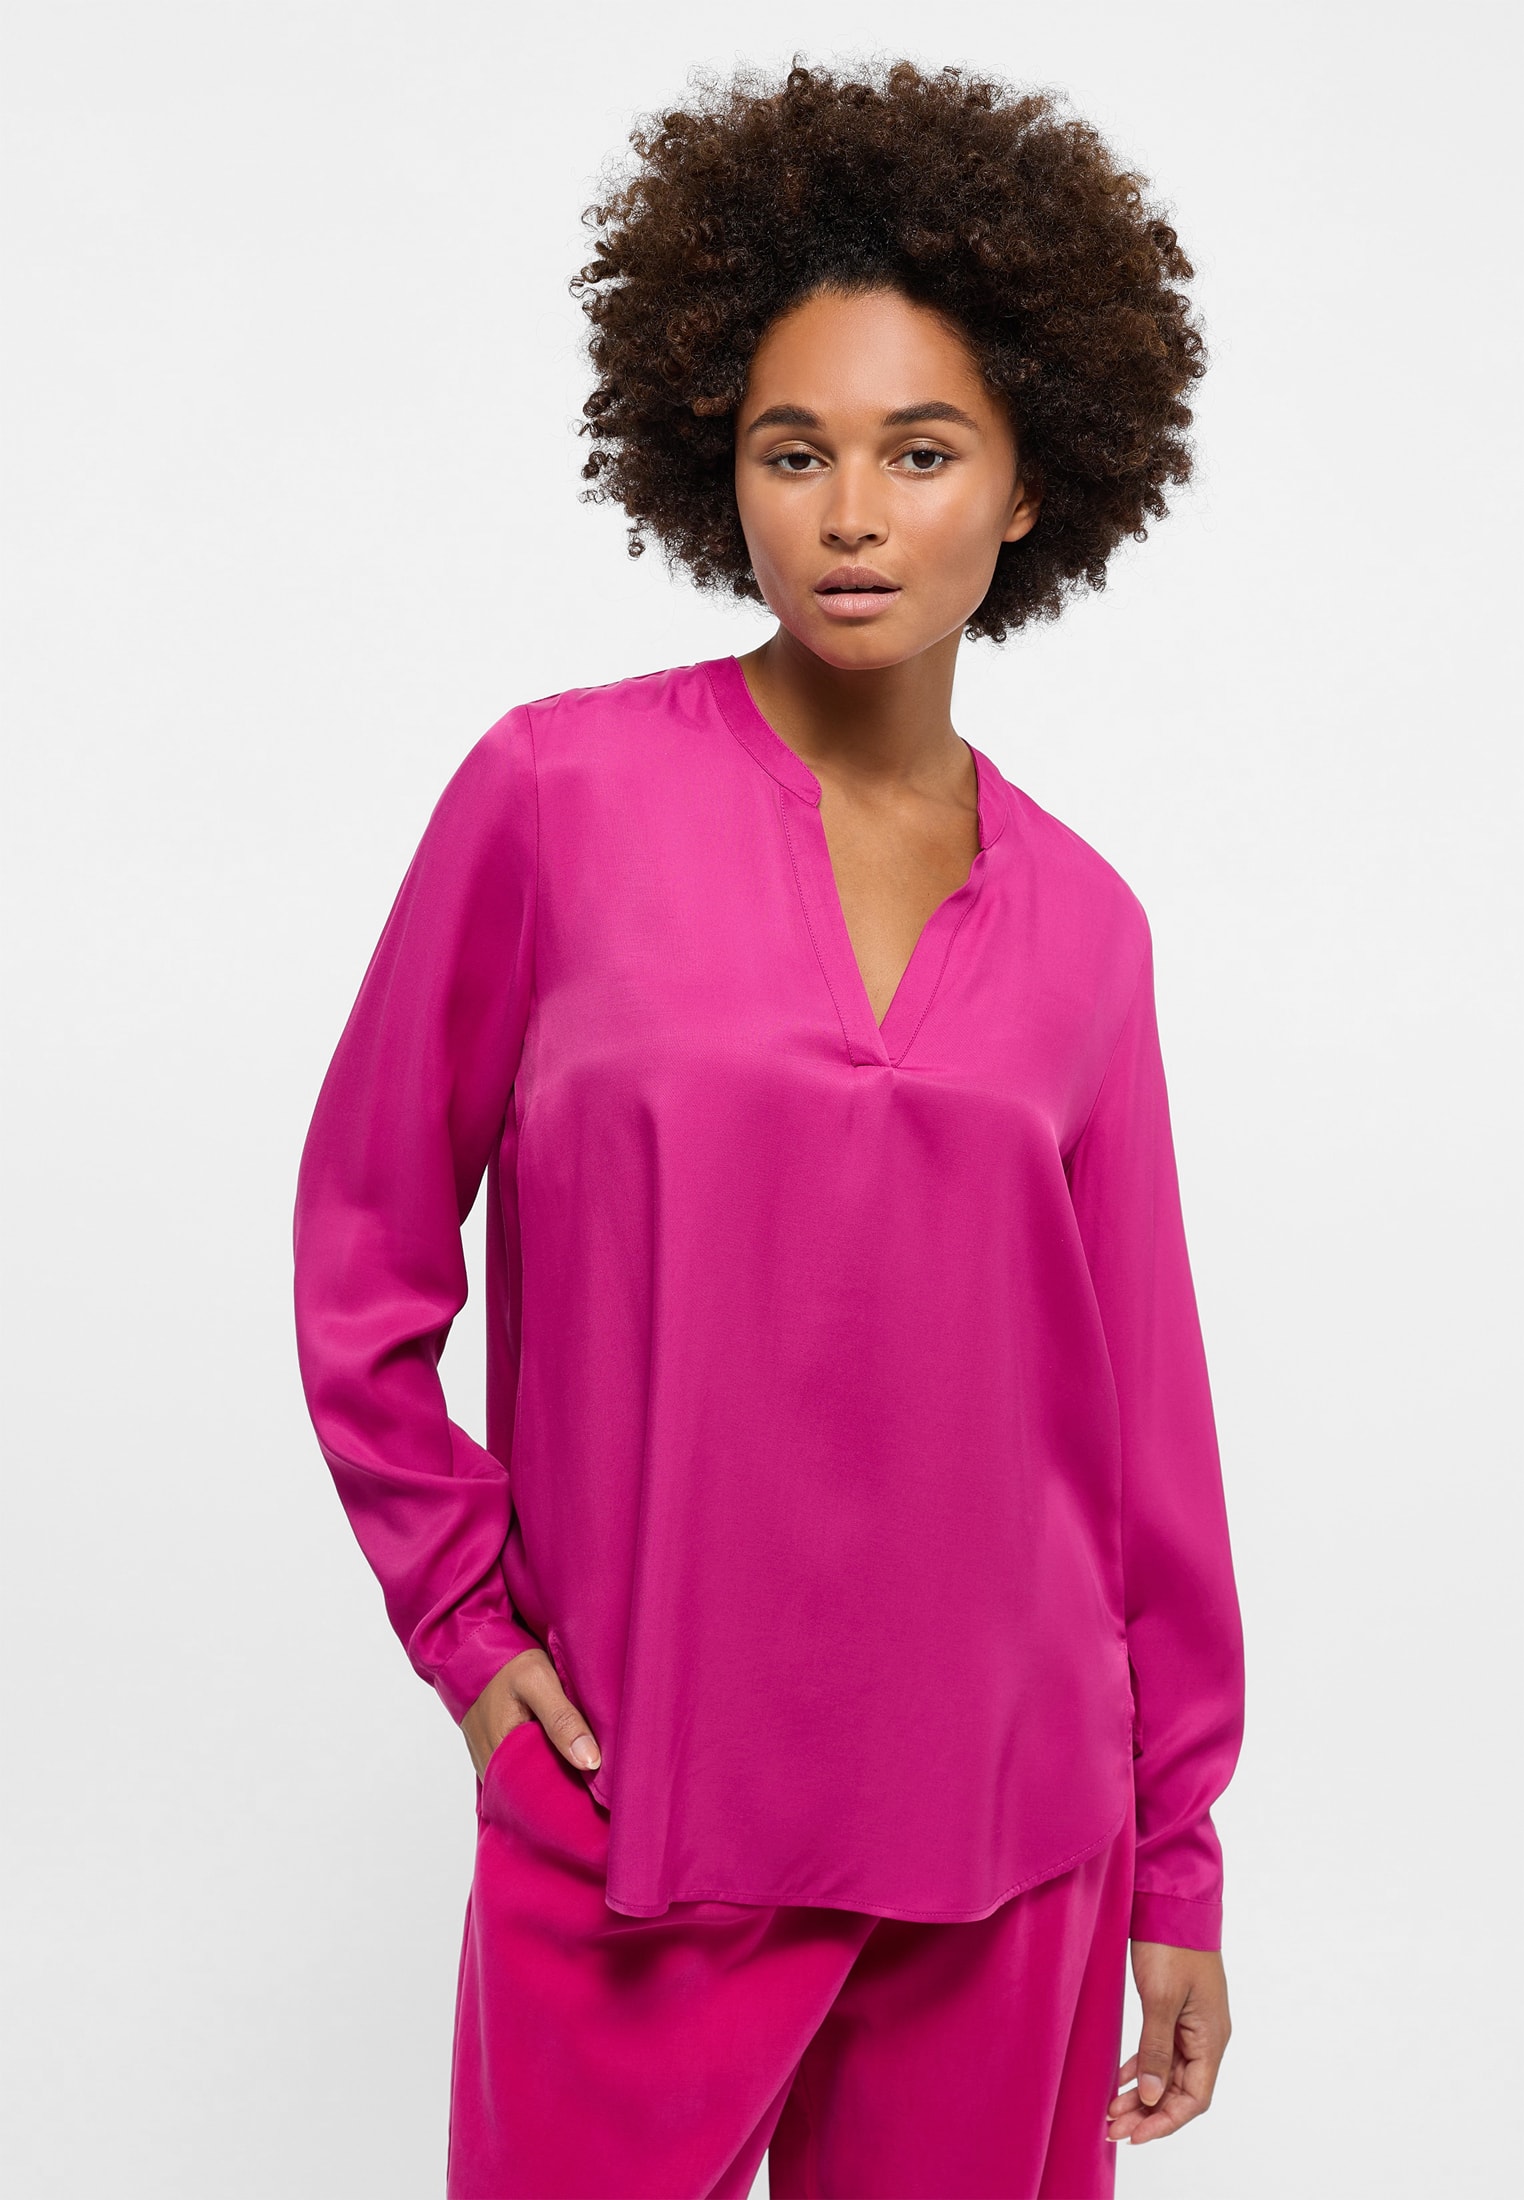 Viscose Shirt Bluse in vibrant pink unifarben | vibrant pink | 38 | Langarm  | 2BL00329-15-31-38-1/1 | Schlupfblusen